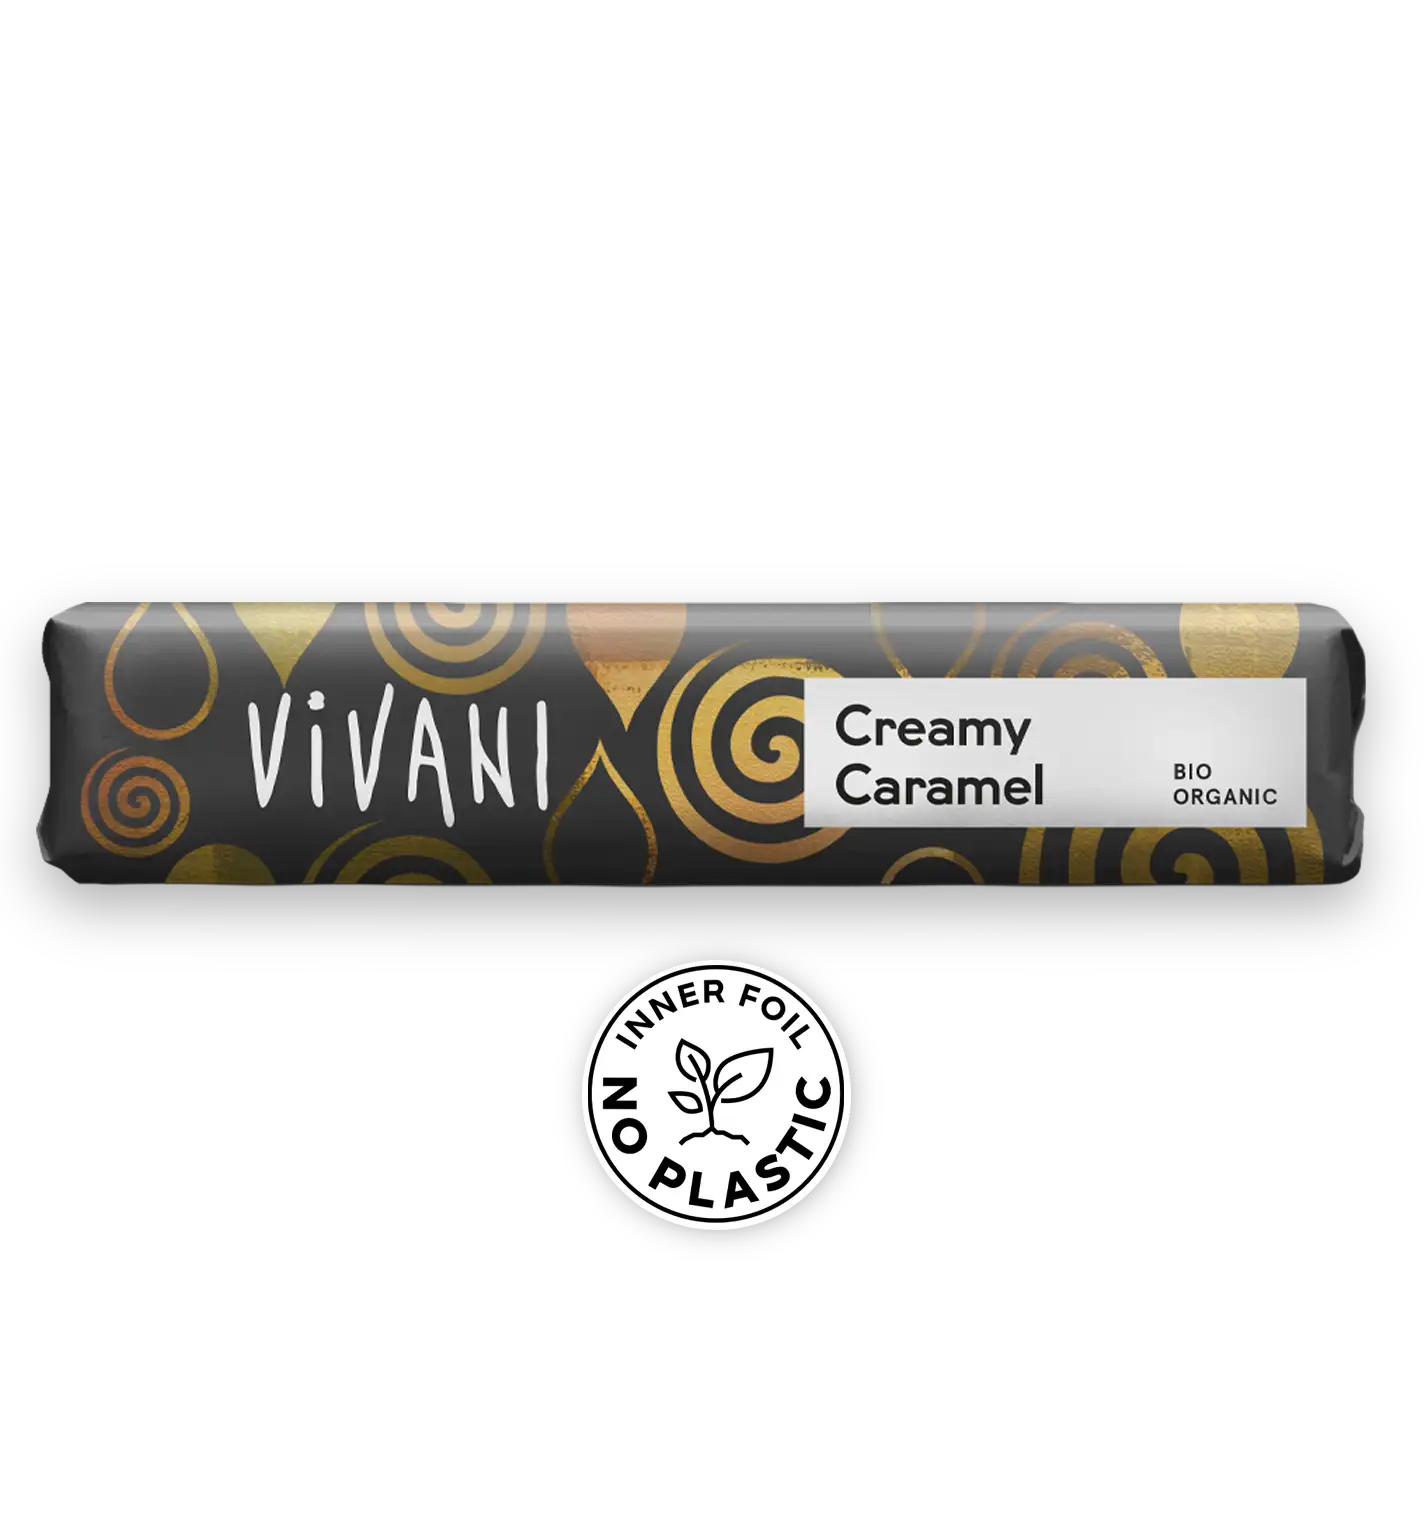 VIVANI's organic chocolate bar Creamy Caramel with caramel core